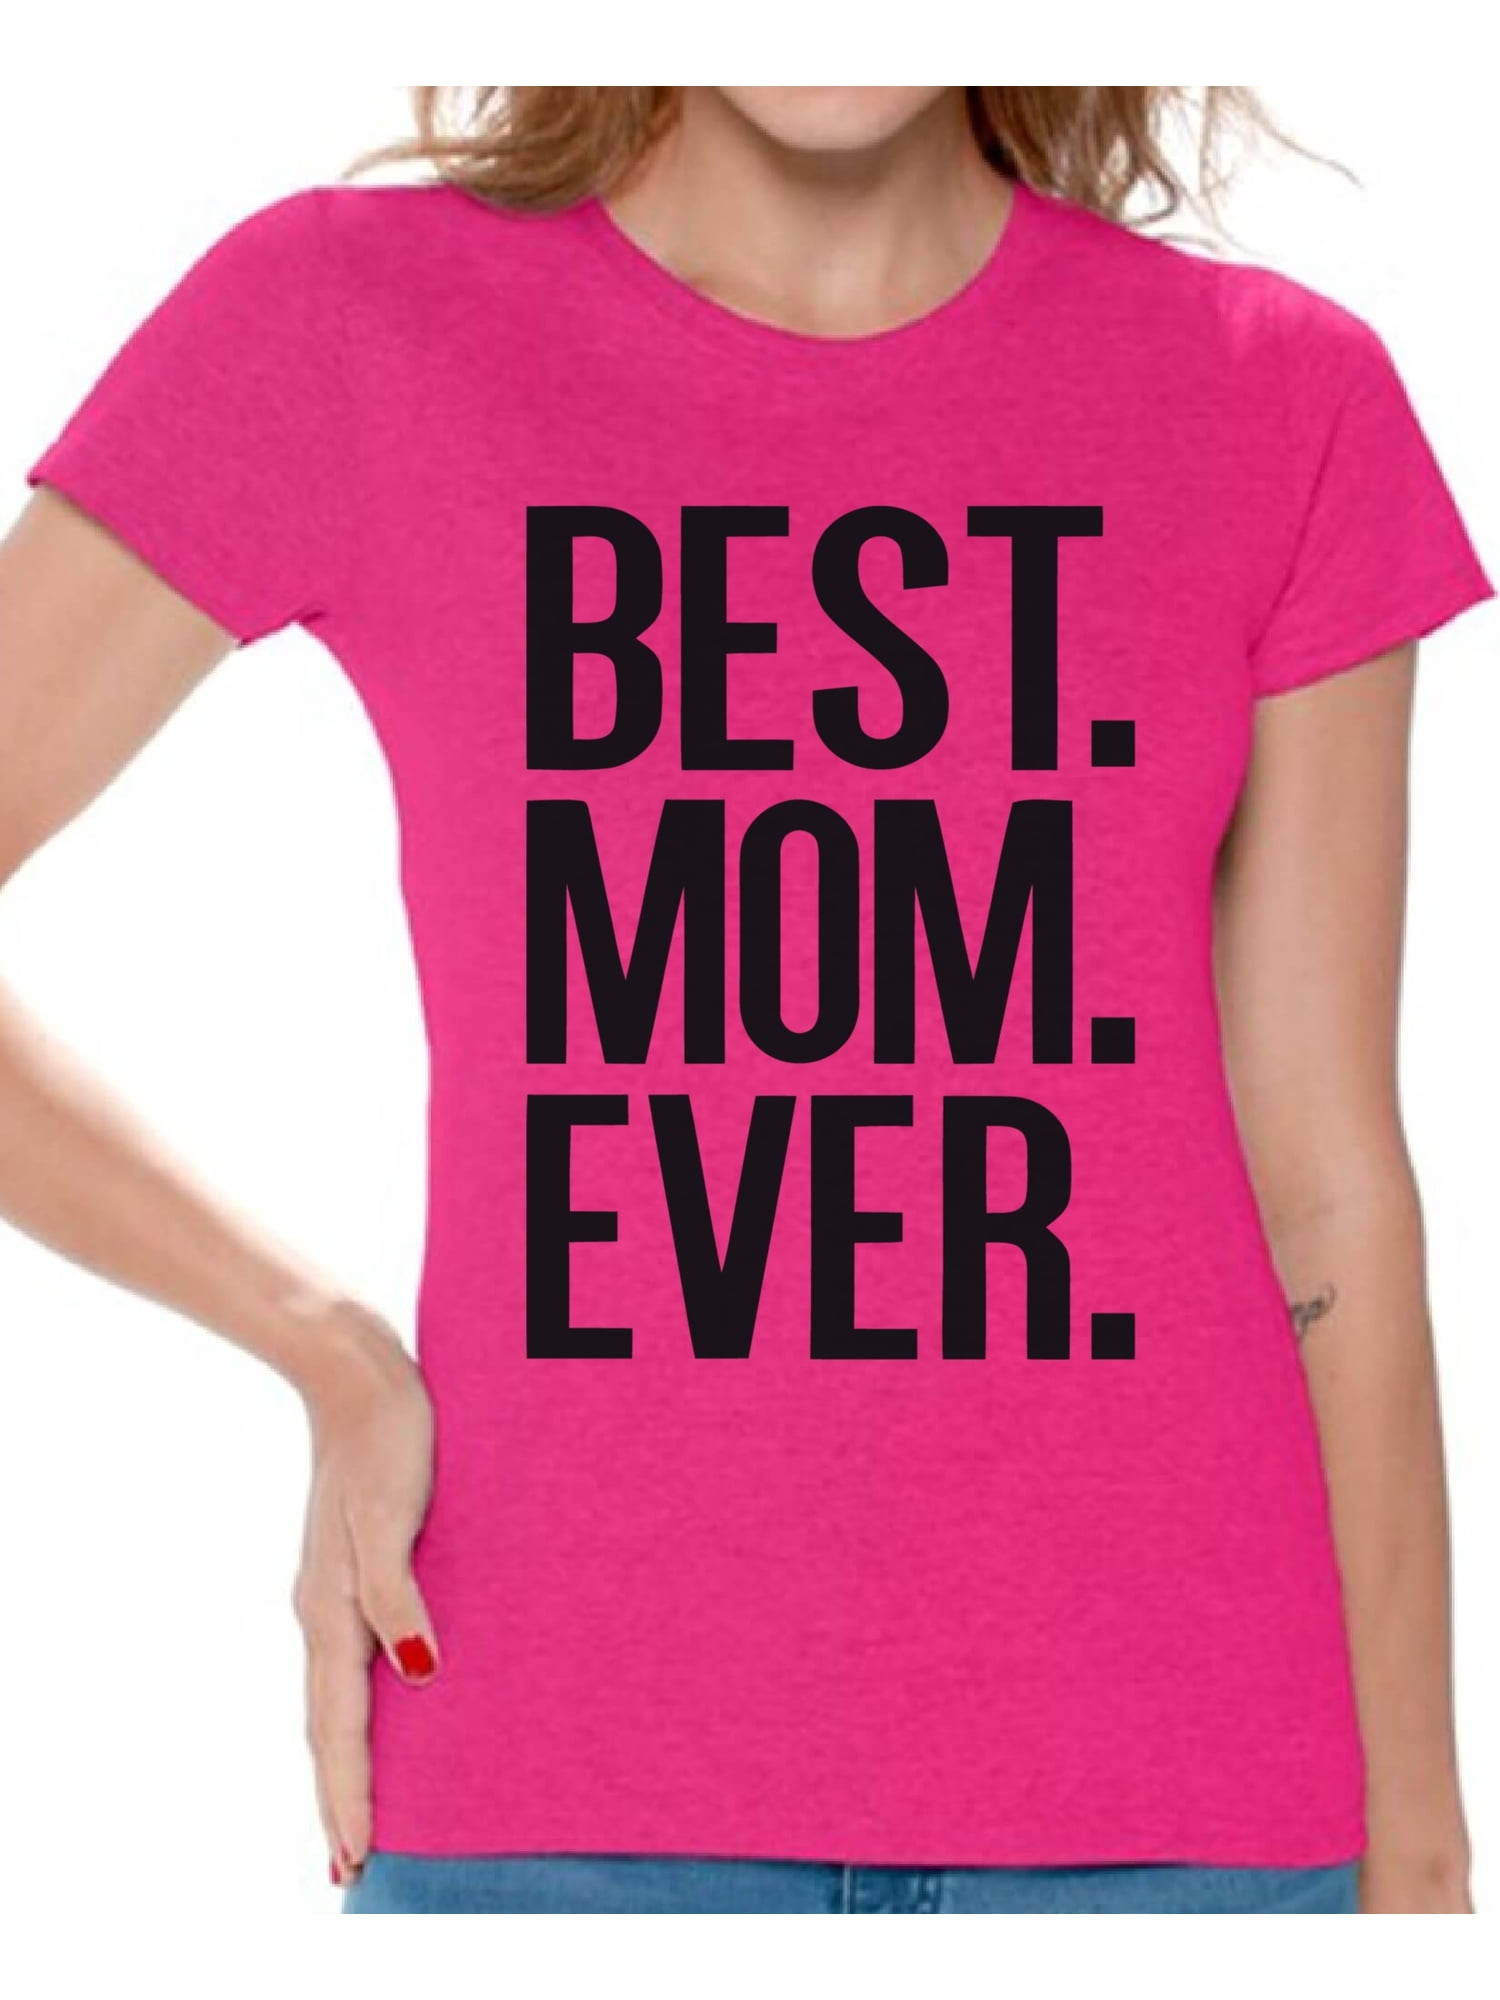 Awkward Styles - Awkward Styles Women's Best Mom Ever Graphic T-shirt ...